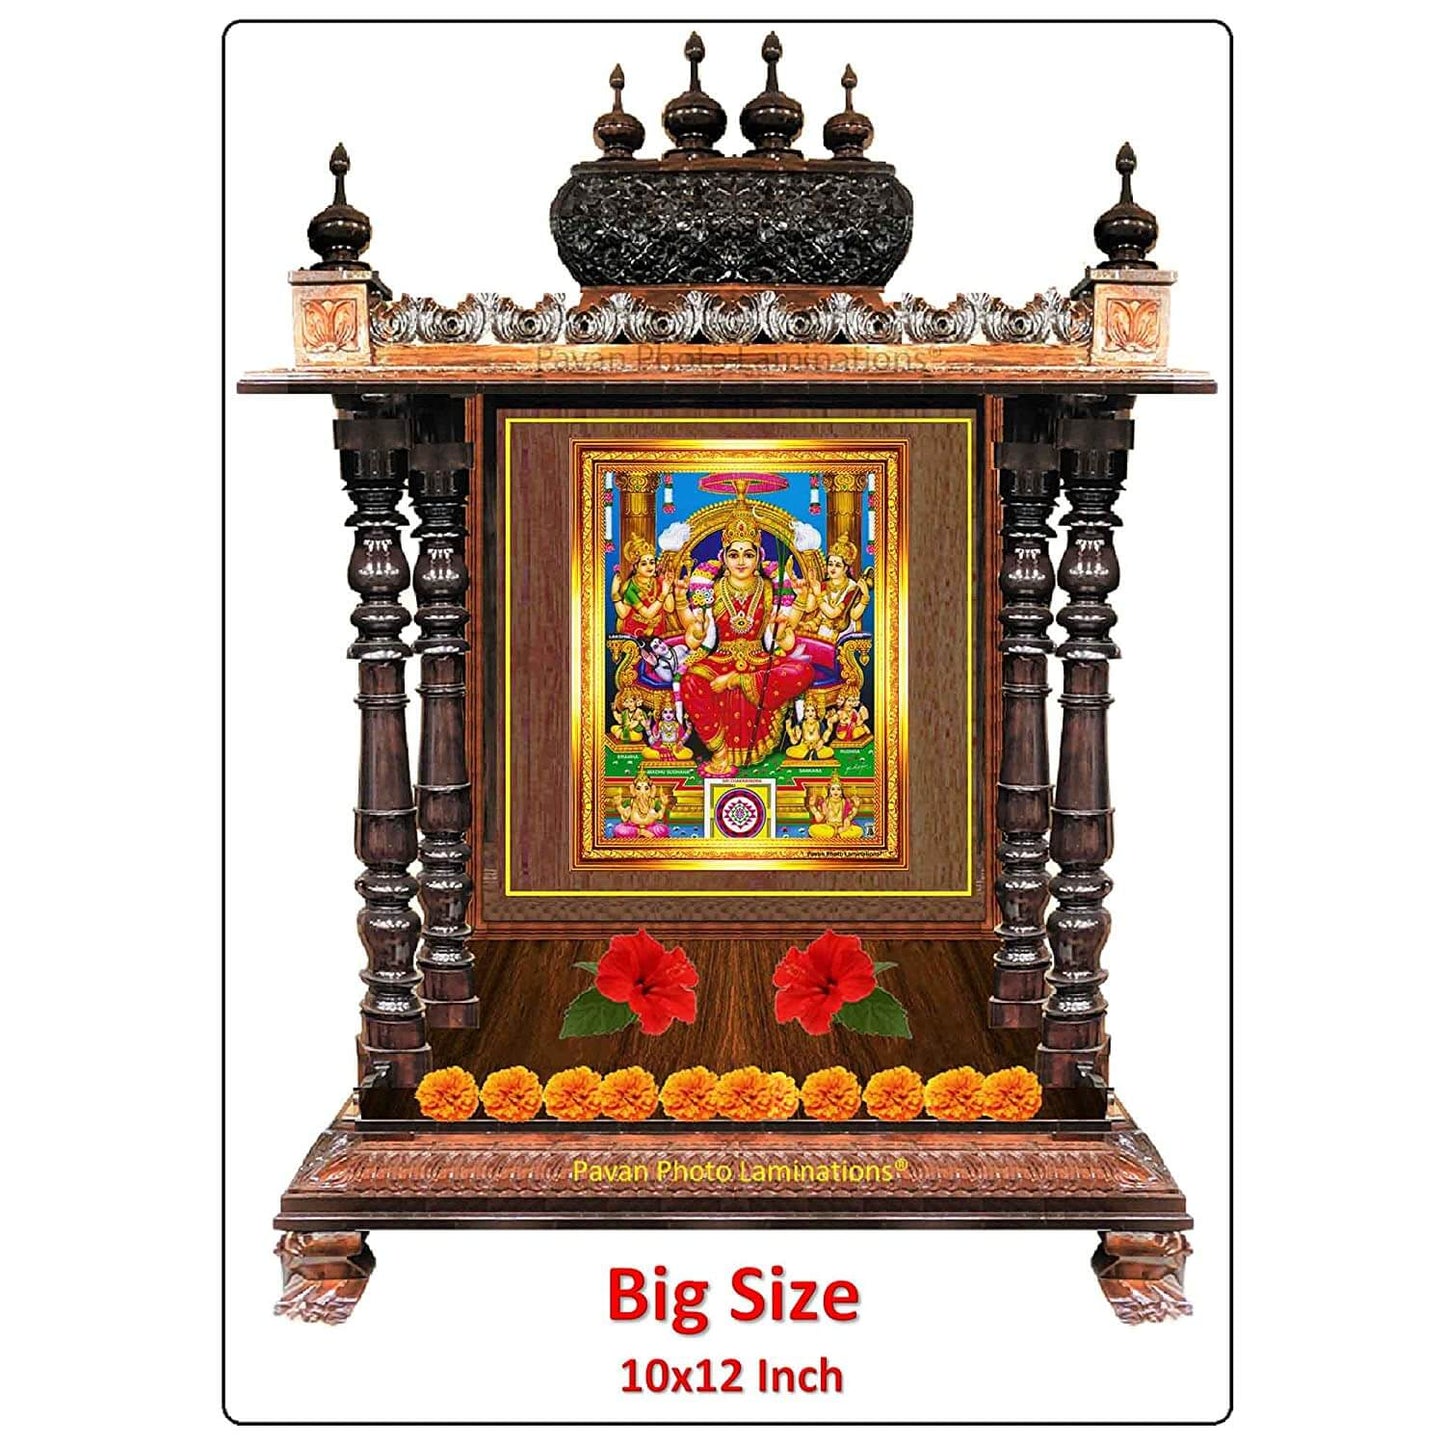 Sri Raja Rajeshwari Devi Lalita Tripura Sundari Amman Photo Frame (Golden Color, Size 10x12 Inch) Mangal Fashions | Indian Home Decor and Craft